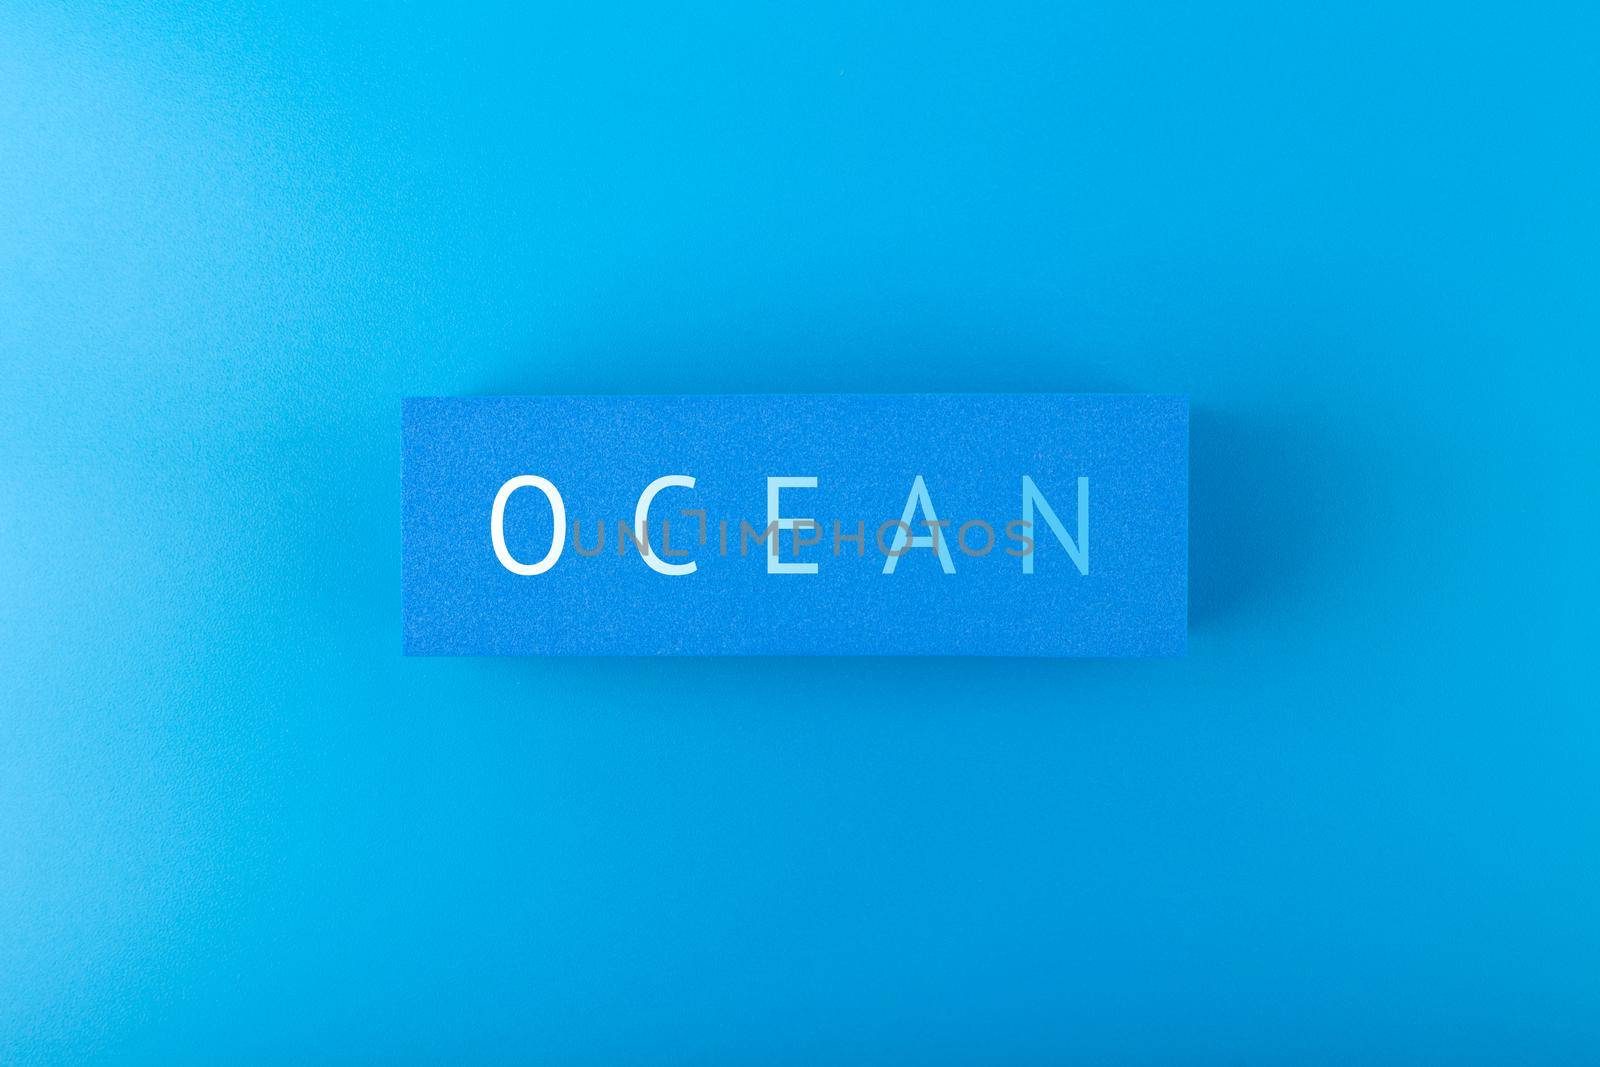 Single word ocean on dark blue background with gradient by Senorina_Irina